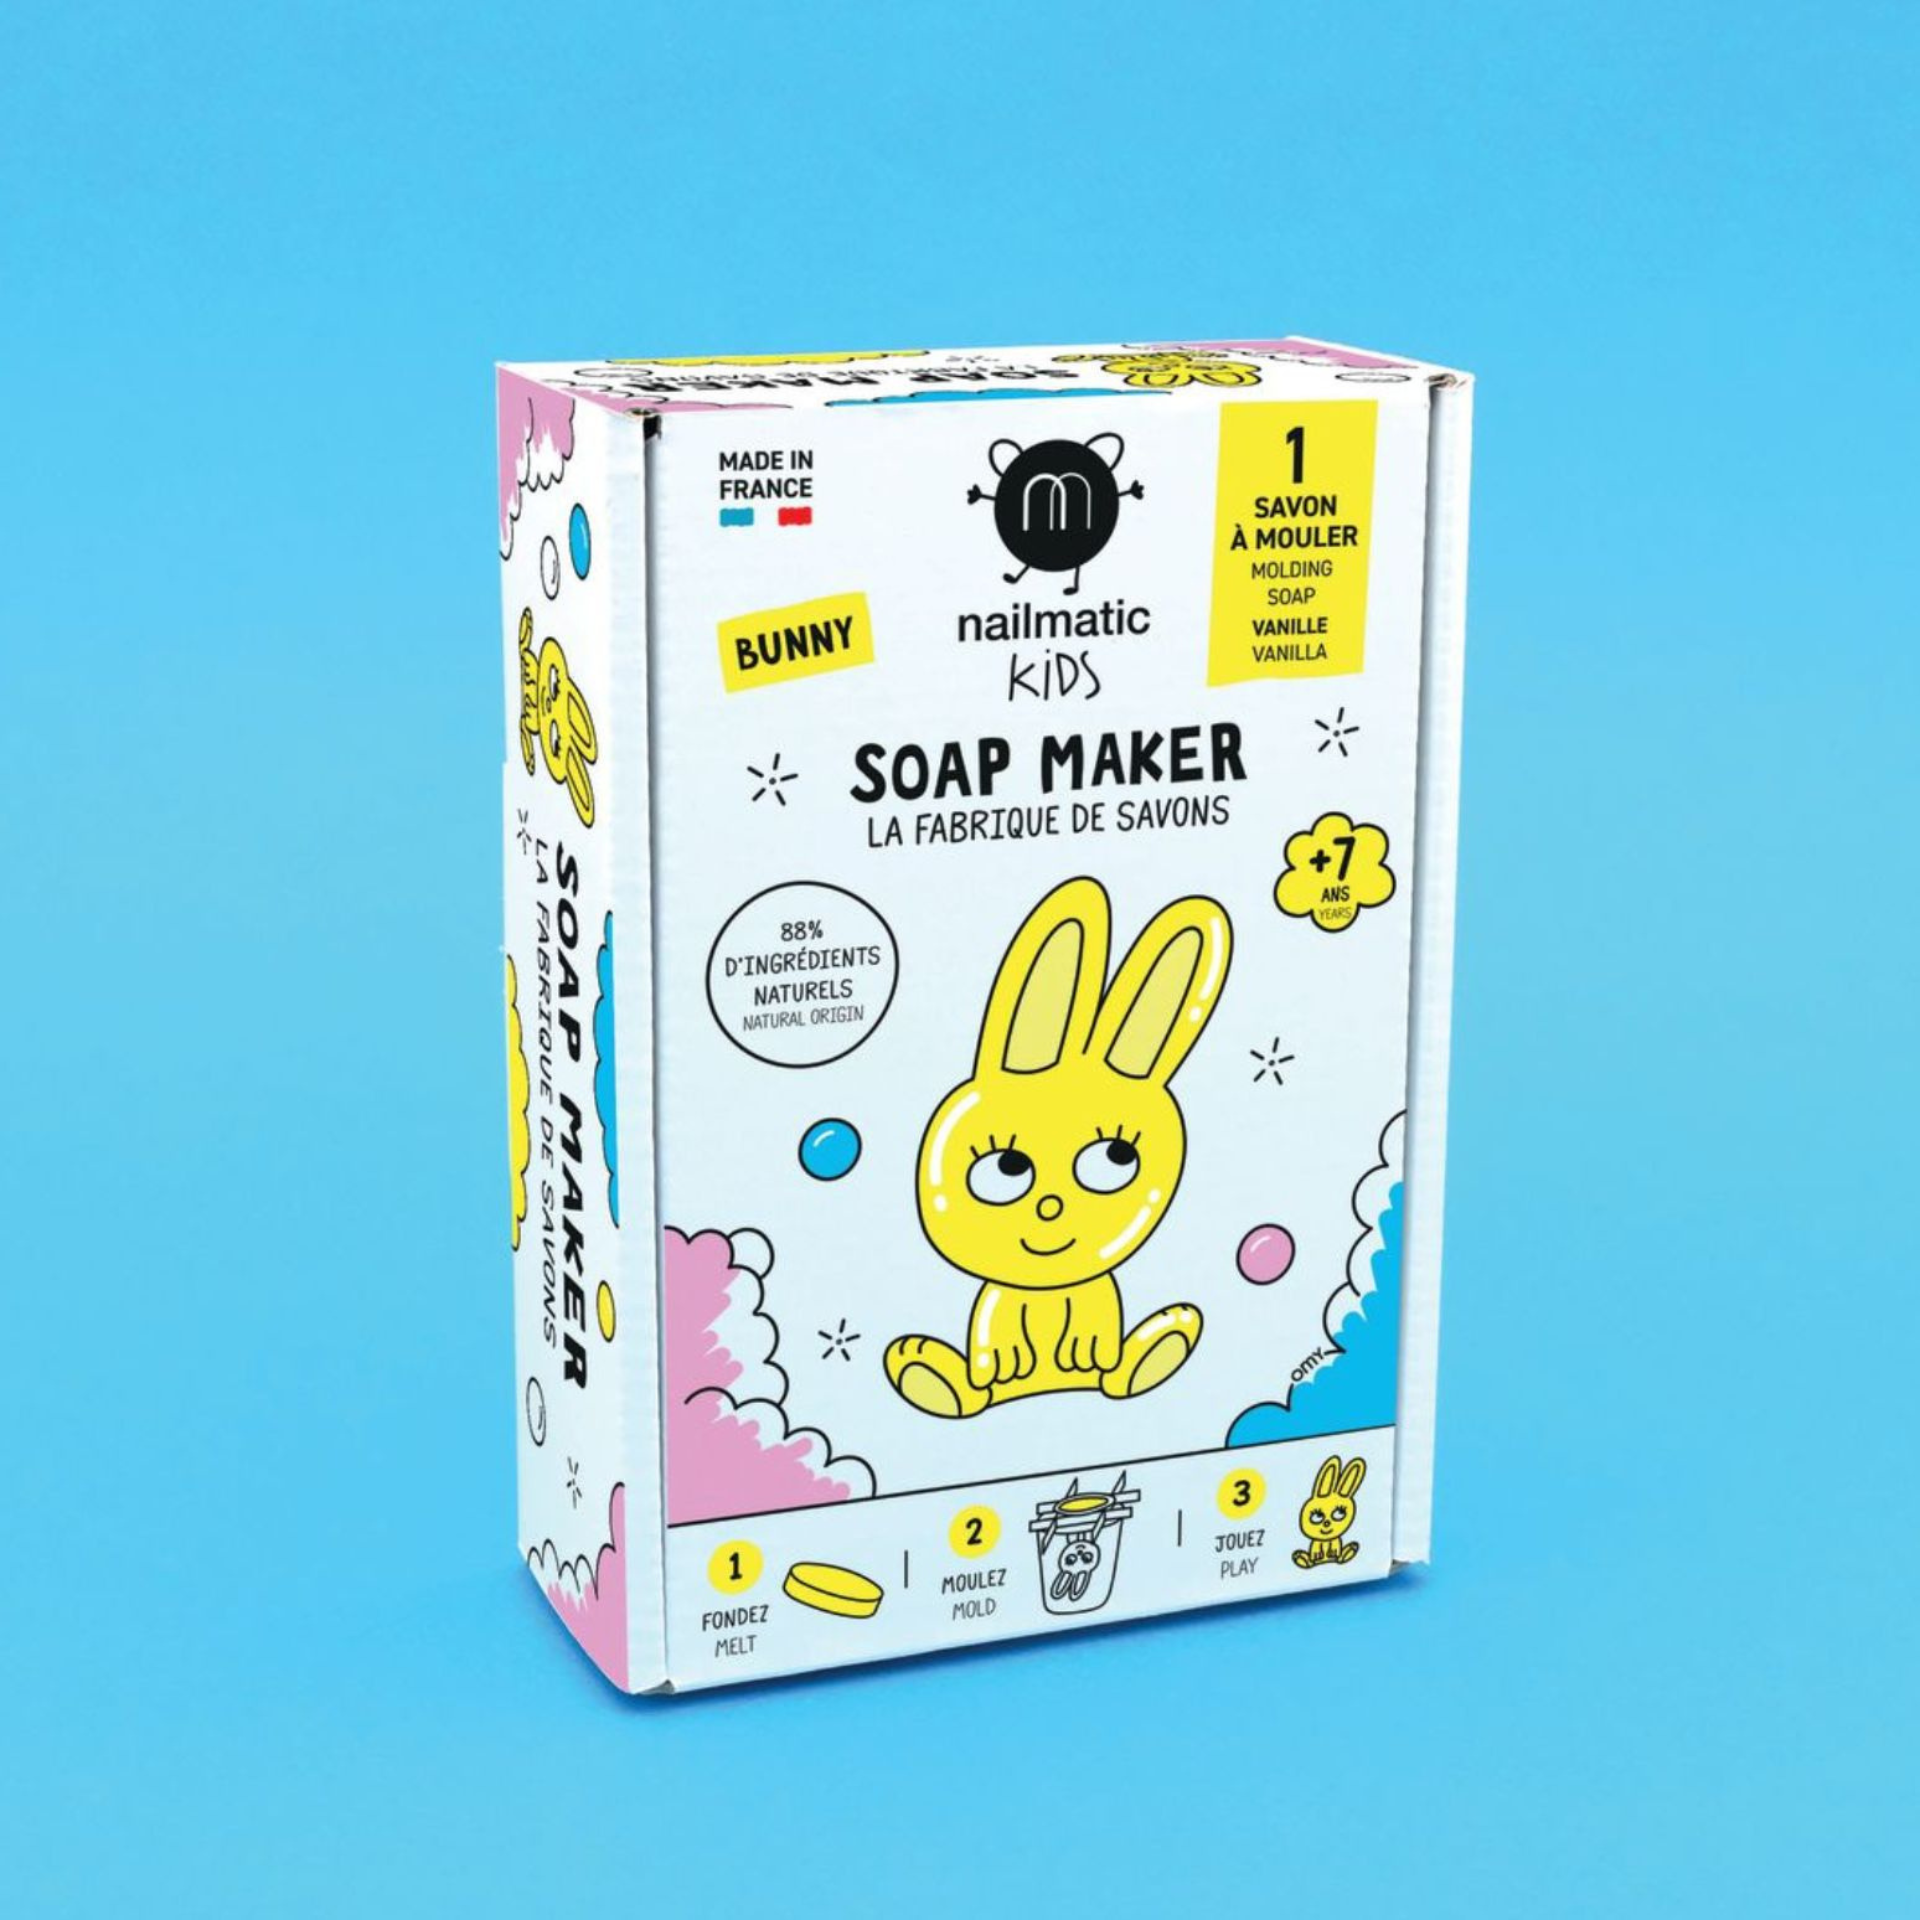 fabrique de savons bunny nailmatic kids